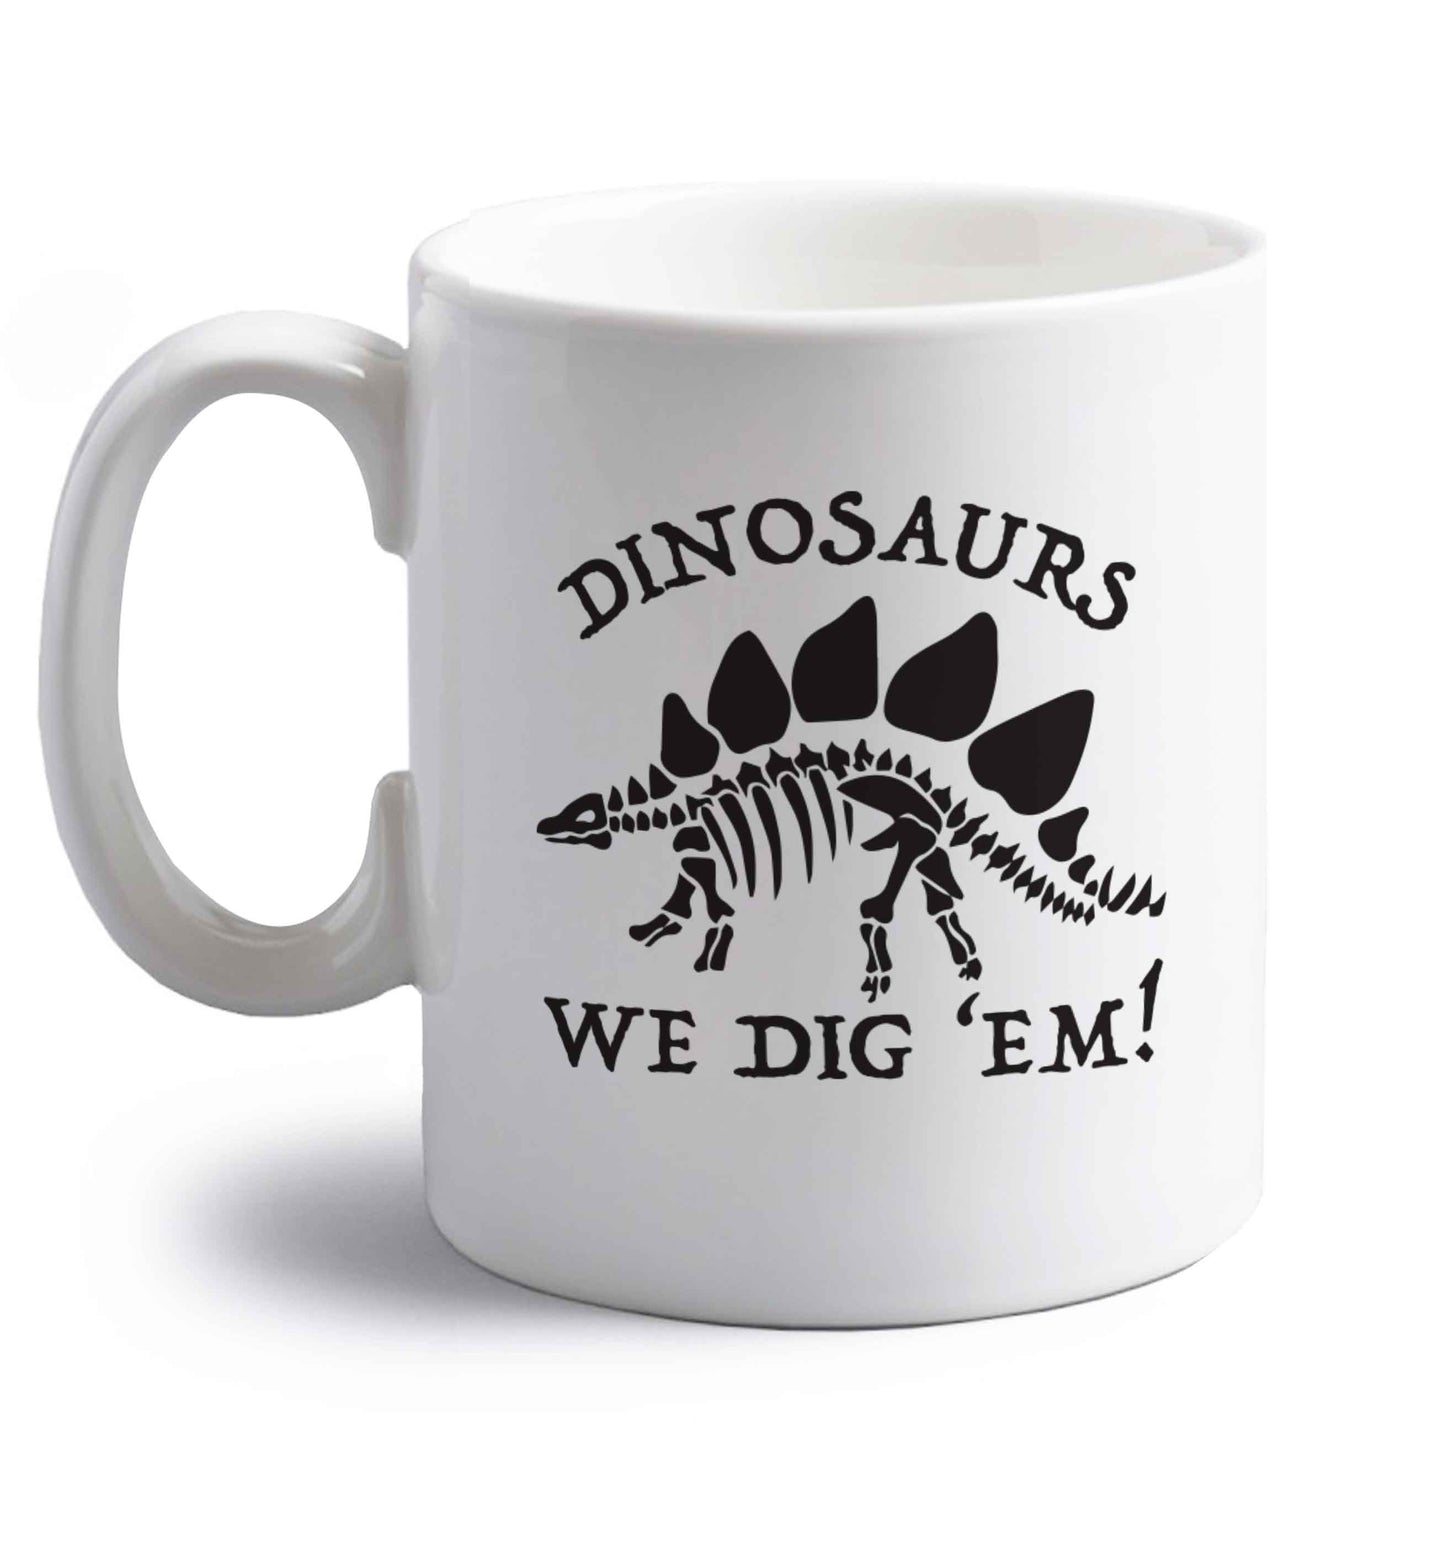 Dinosaurs we dig 'em! right handed white ceramic mug 